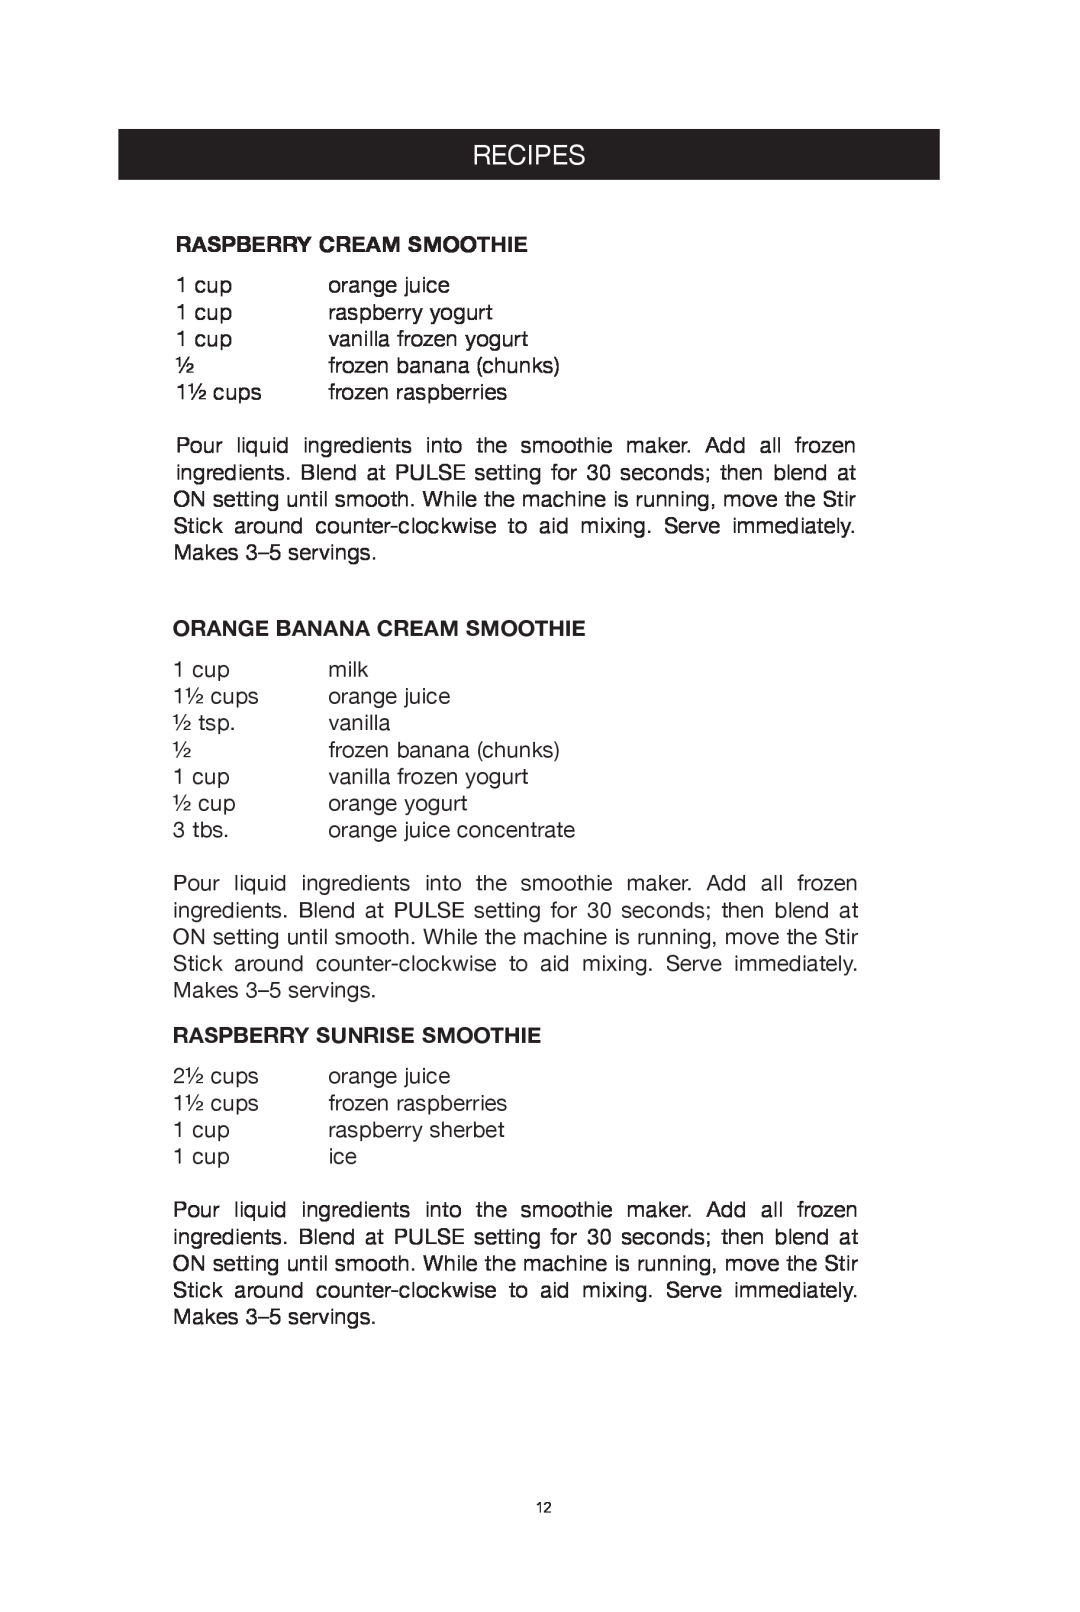 West Bend Back to Basics Smoothie Professional manual Recipes, Raspberry Cream Smoothie, Orange Banana Cream Smoothie 